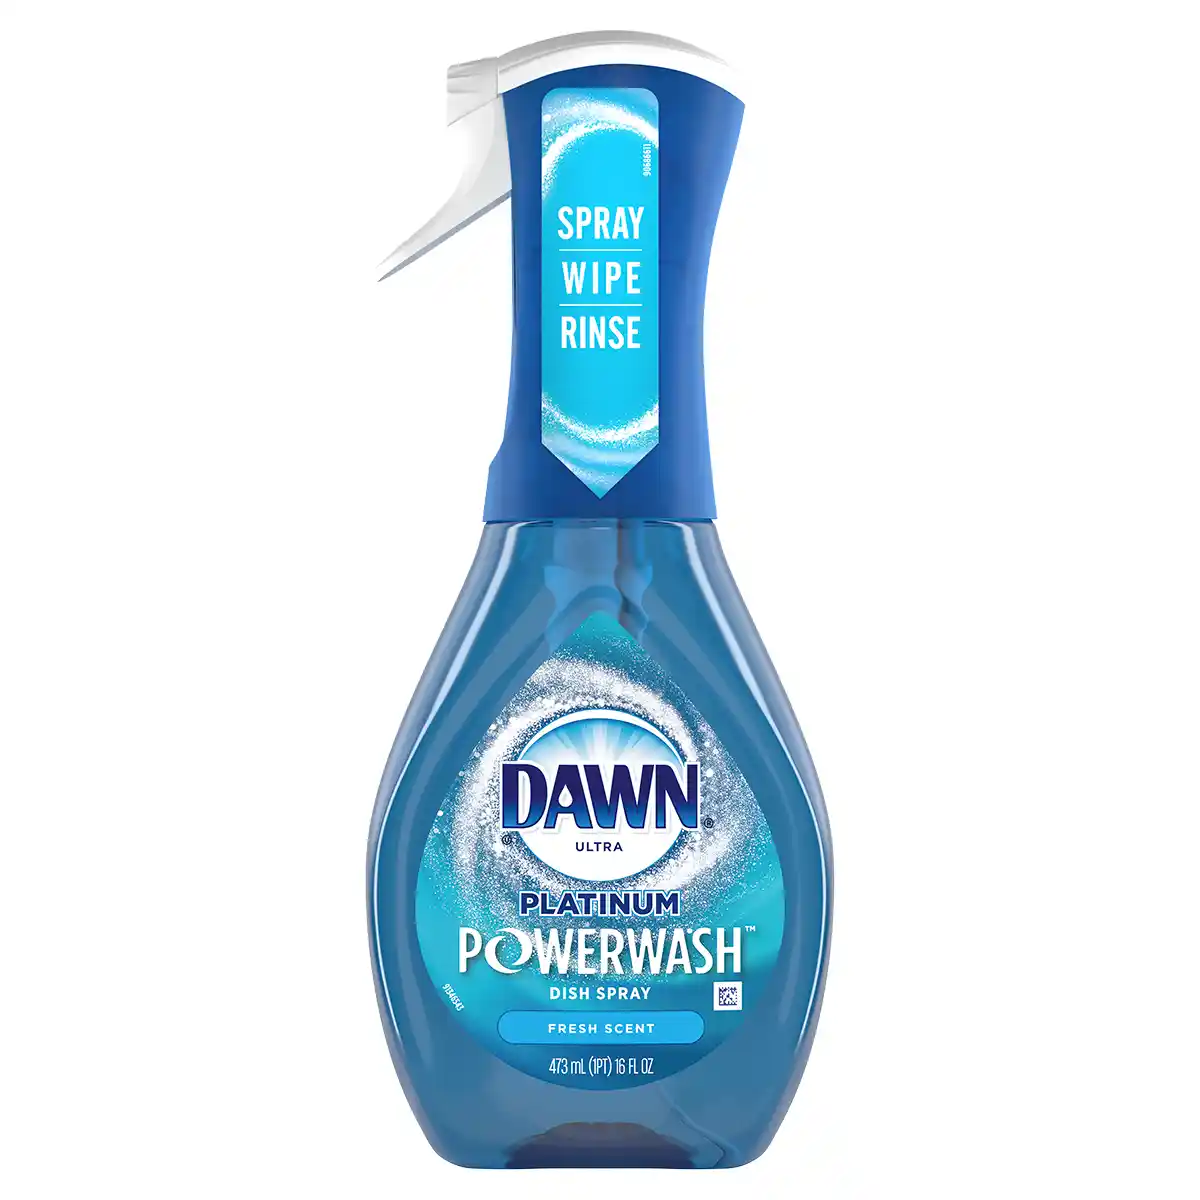 Dawn Platinum Powerwash Dish Spray 16 oz